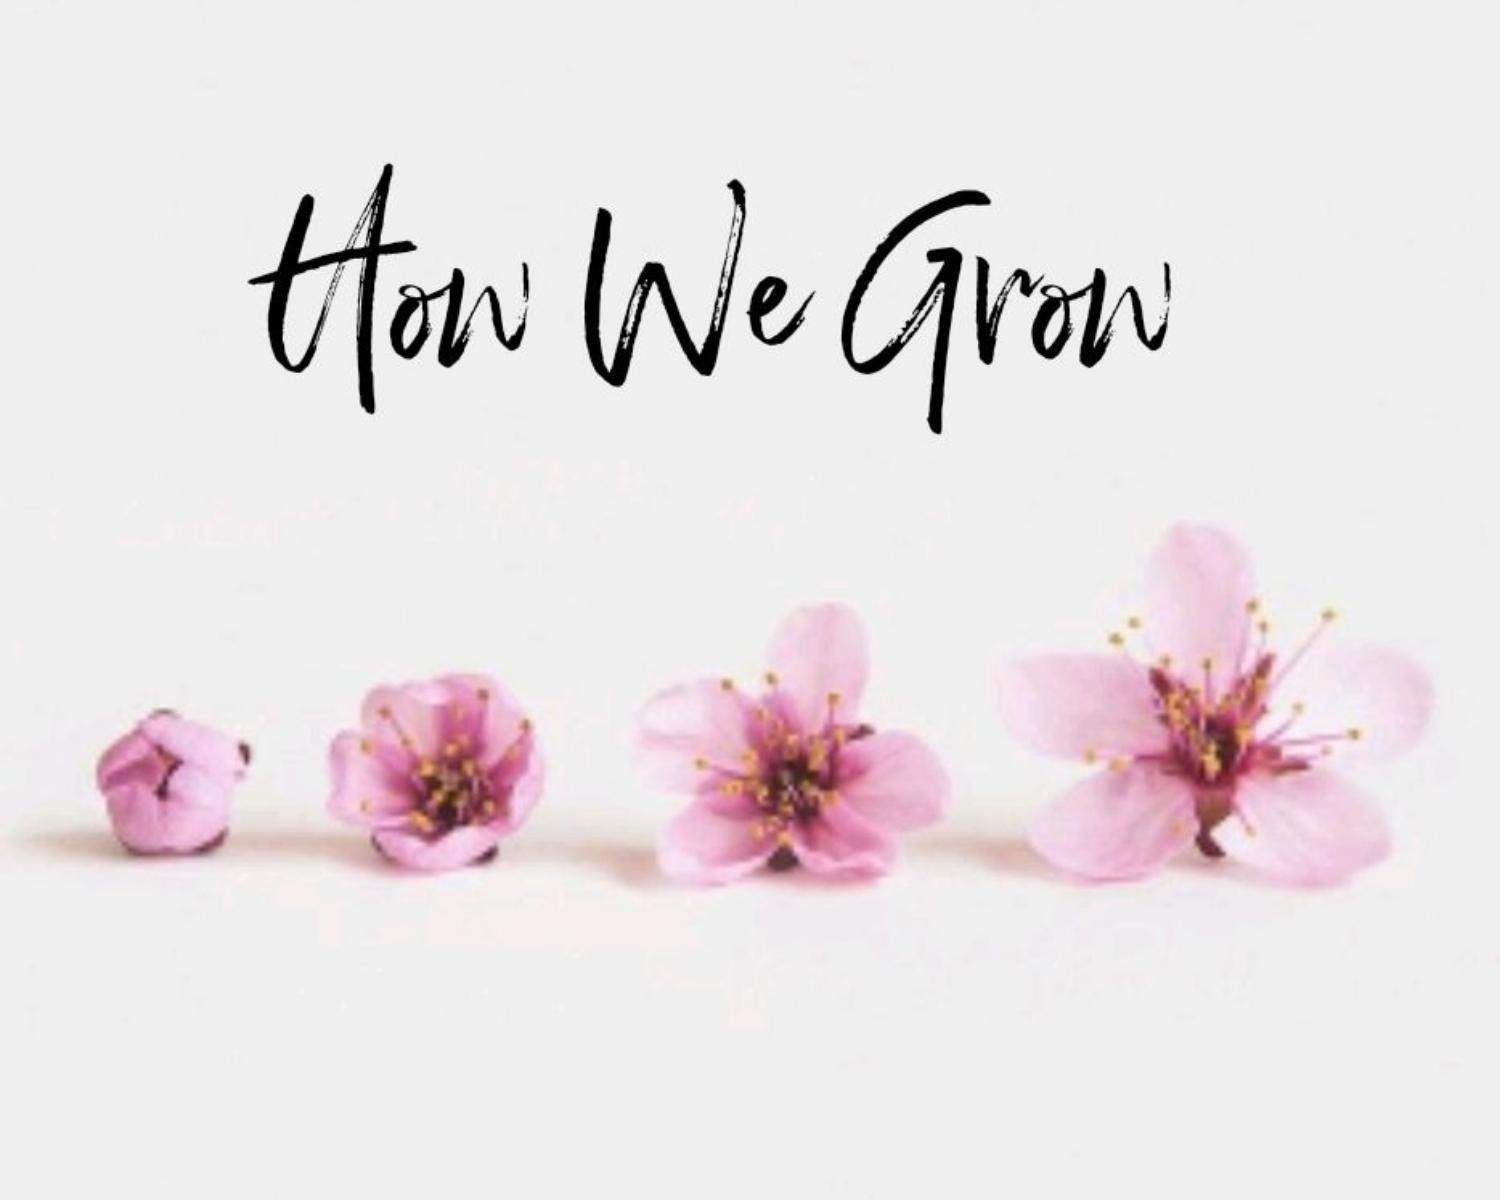 How We Grow